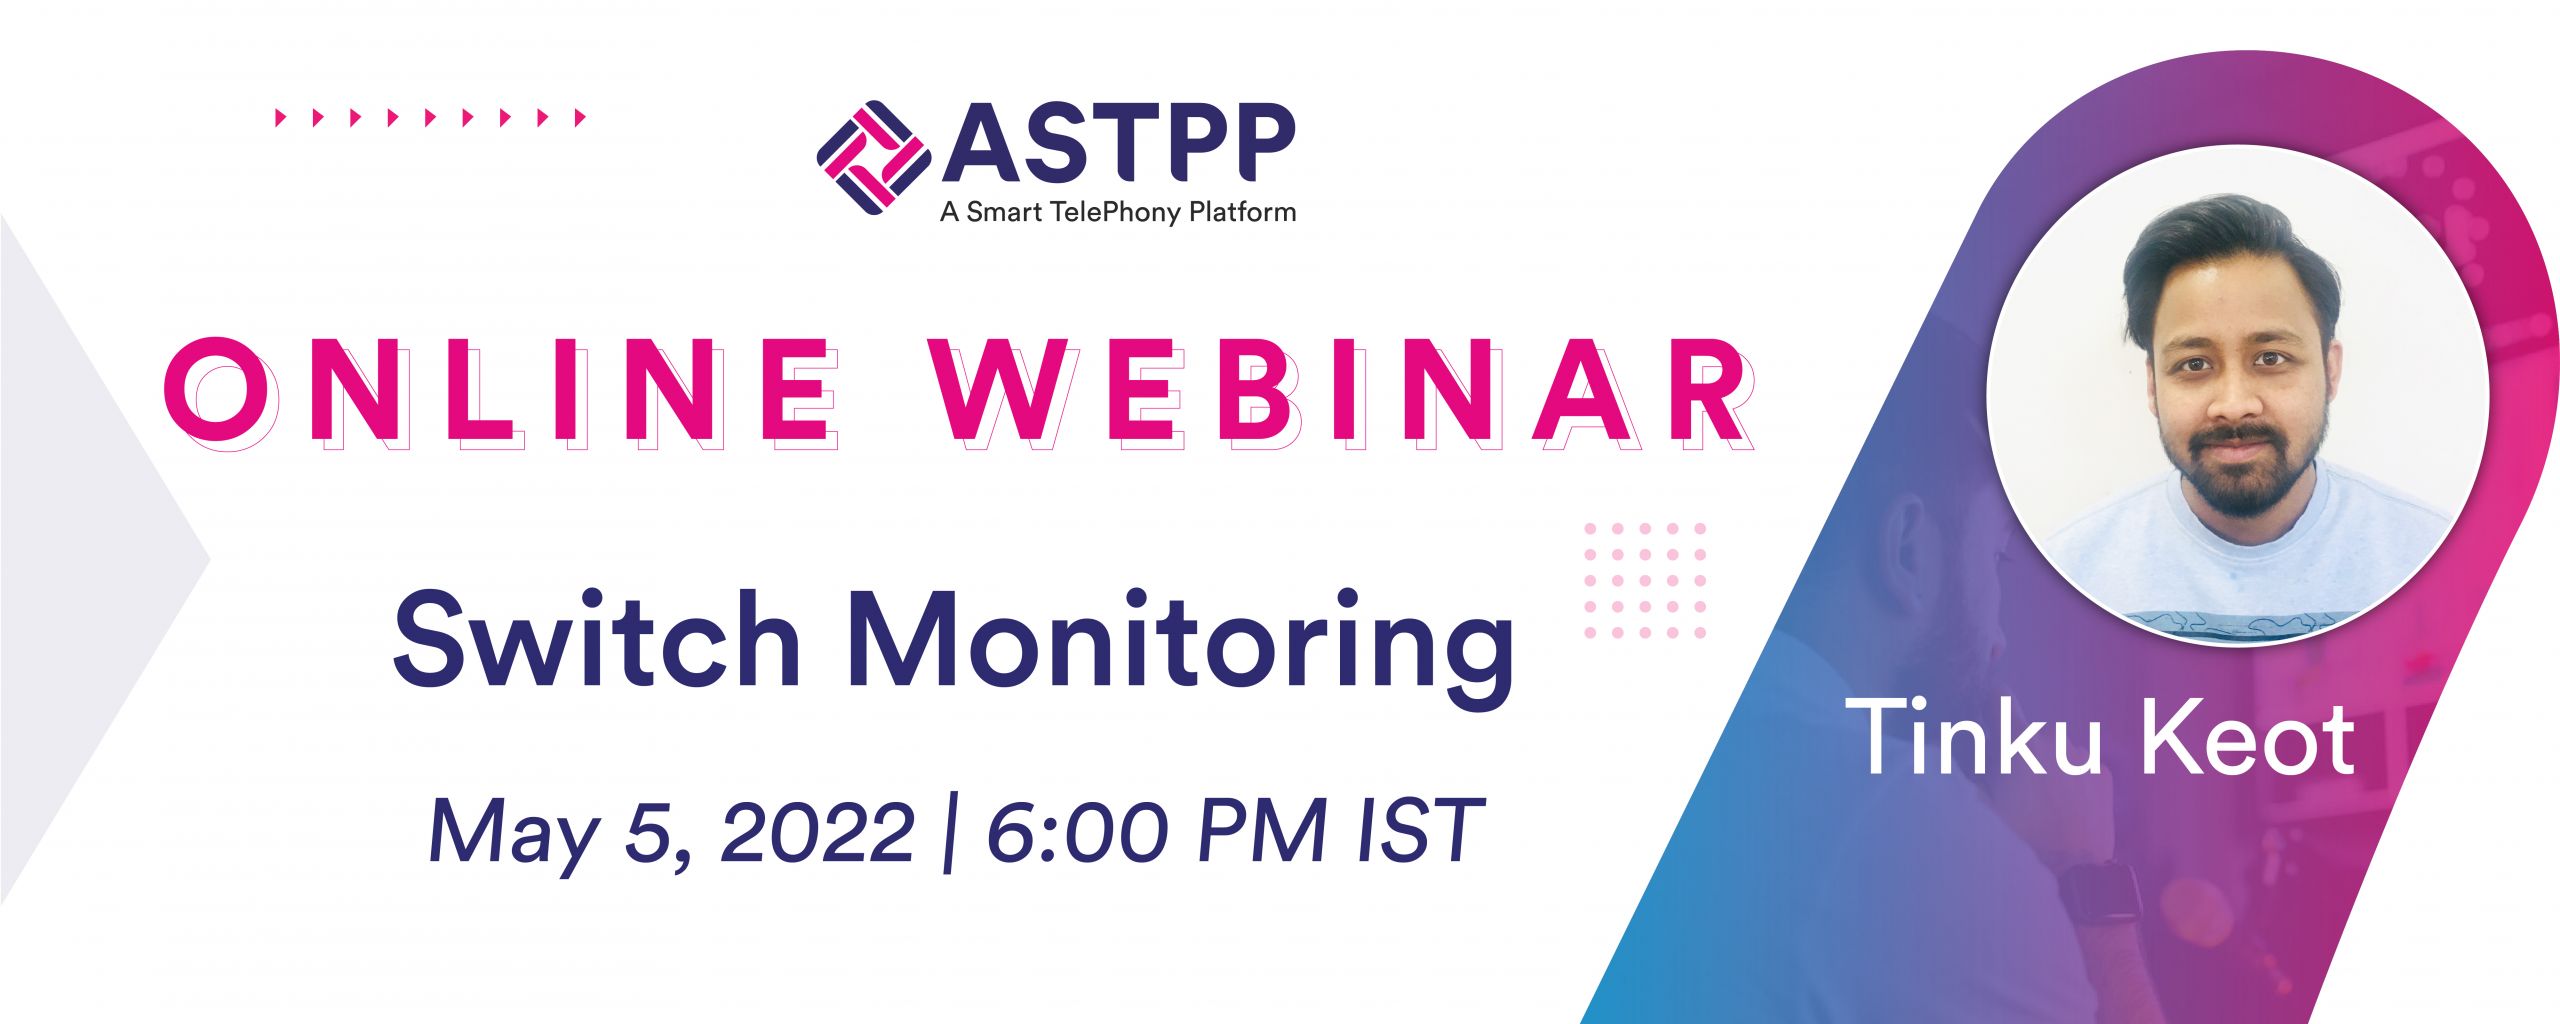 ASTPP Switch Monitoring Webinar